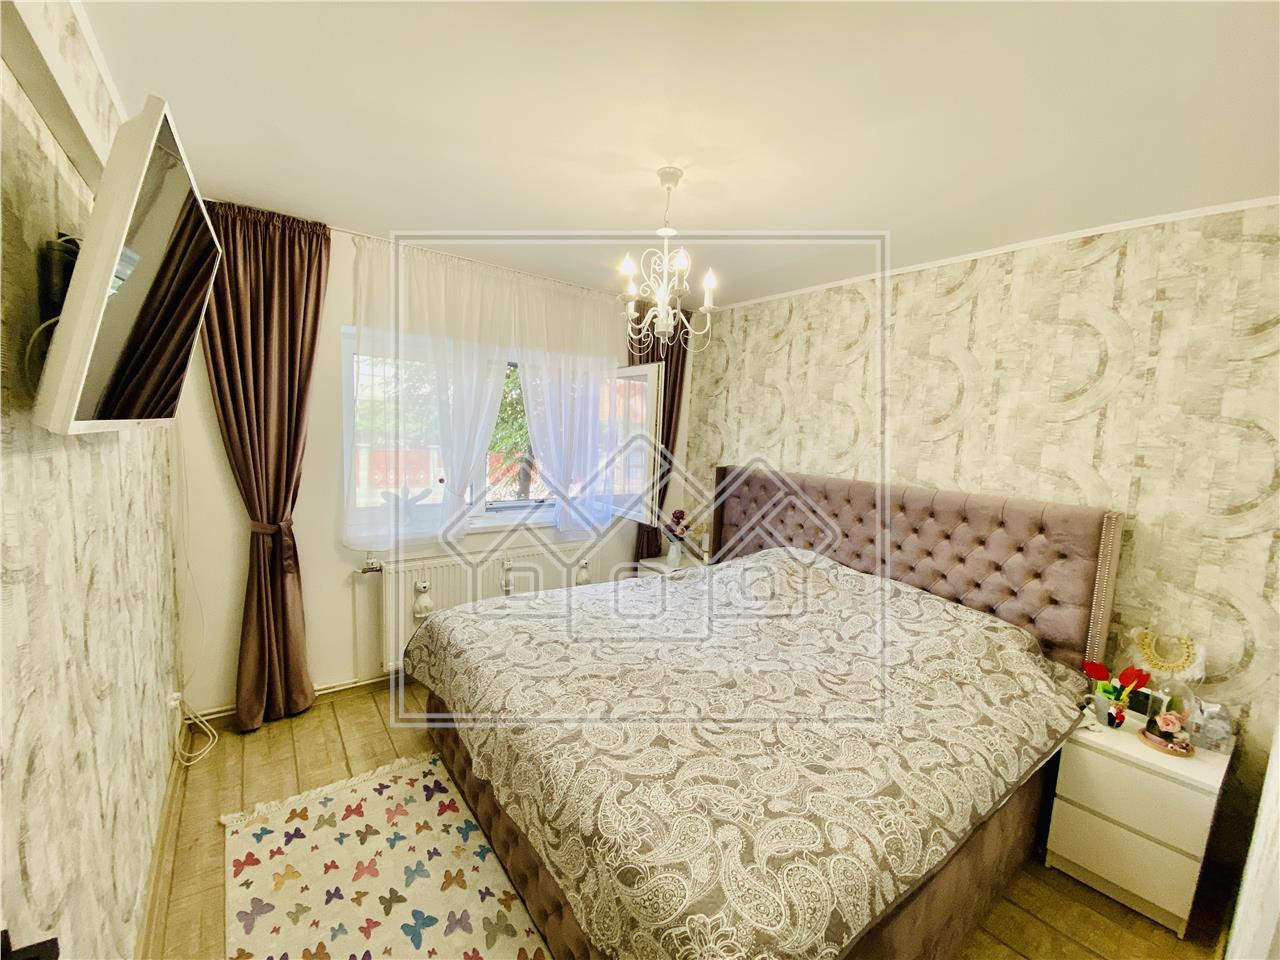 Apartament de vanzare in Sibiu - 3 camere si balcon - Zona Valea Aurie